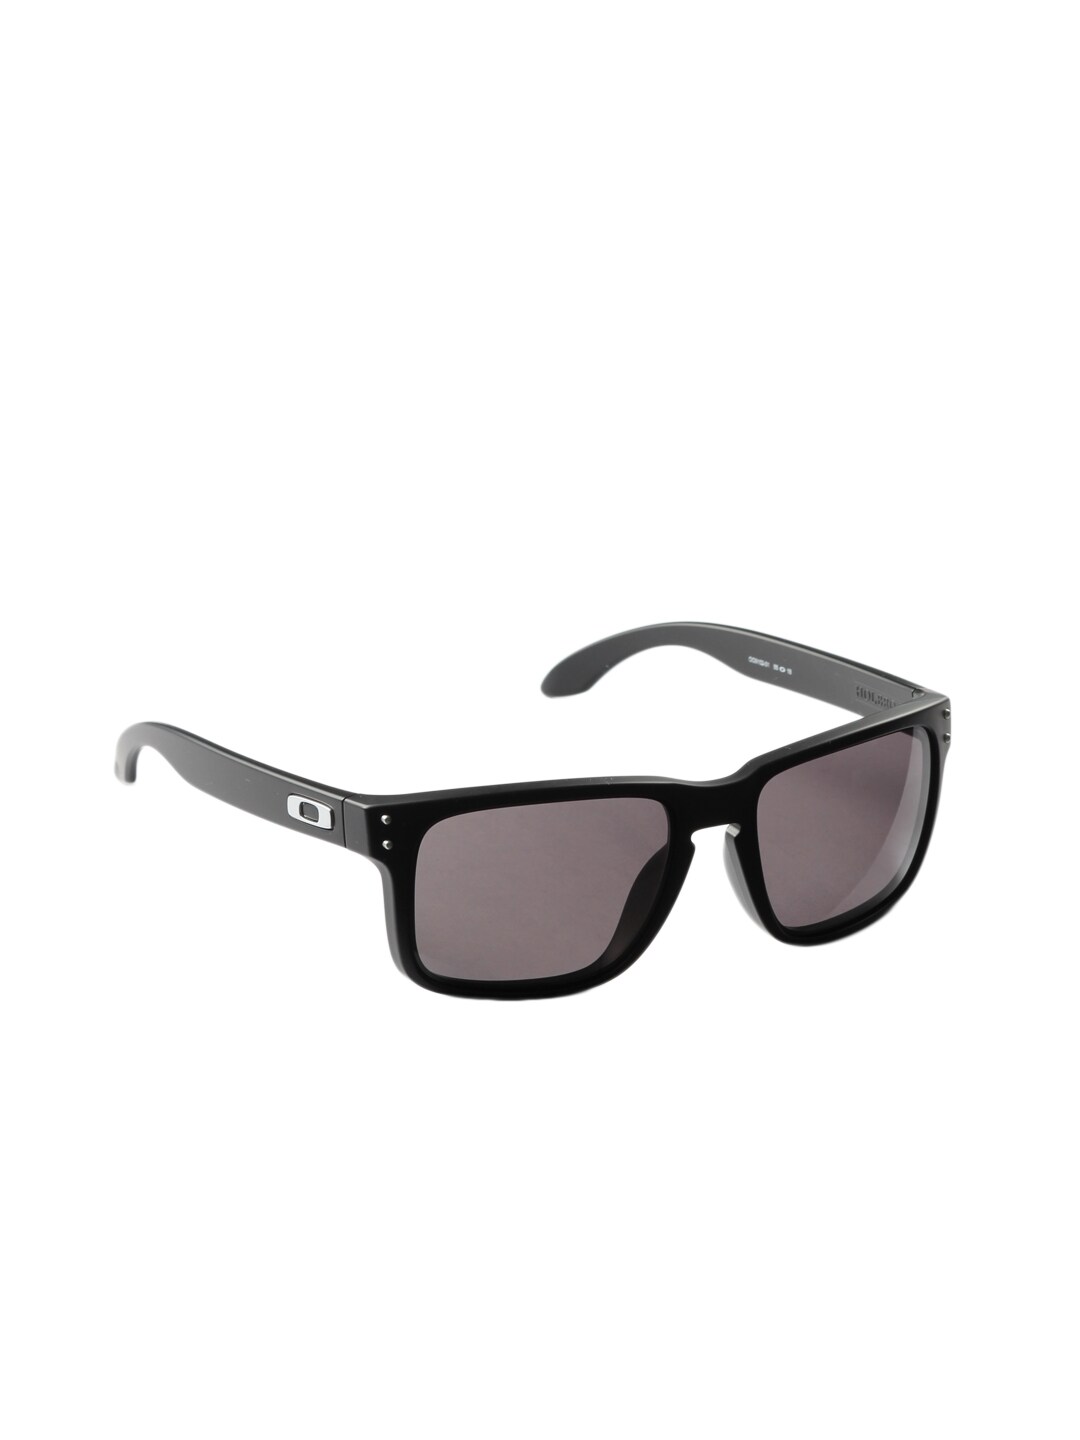 Oakley Men Holbrook Black Sunglasses